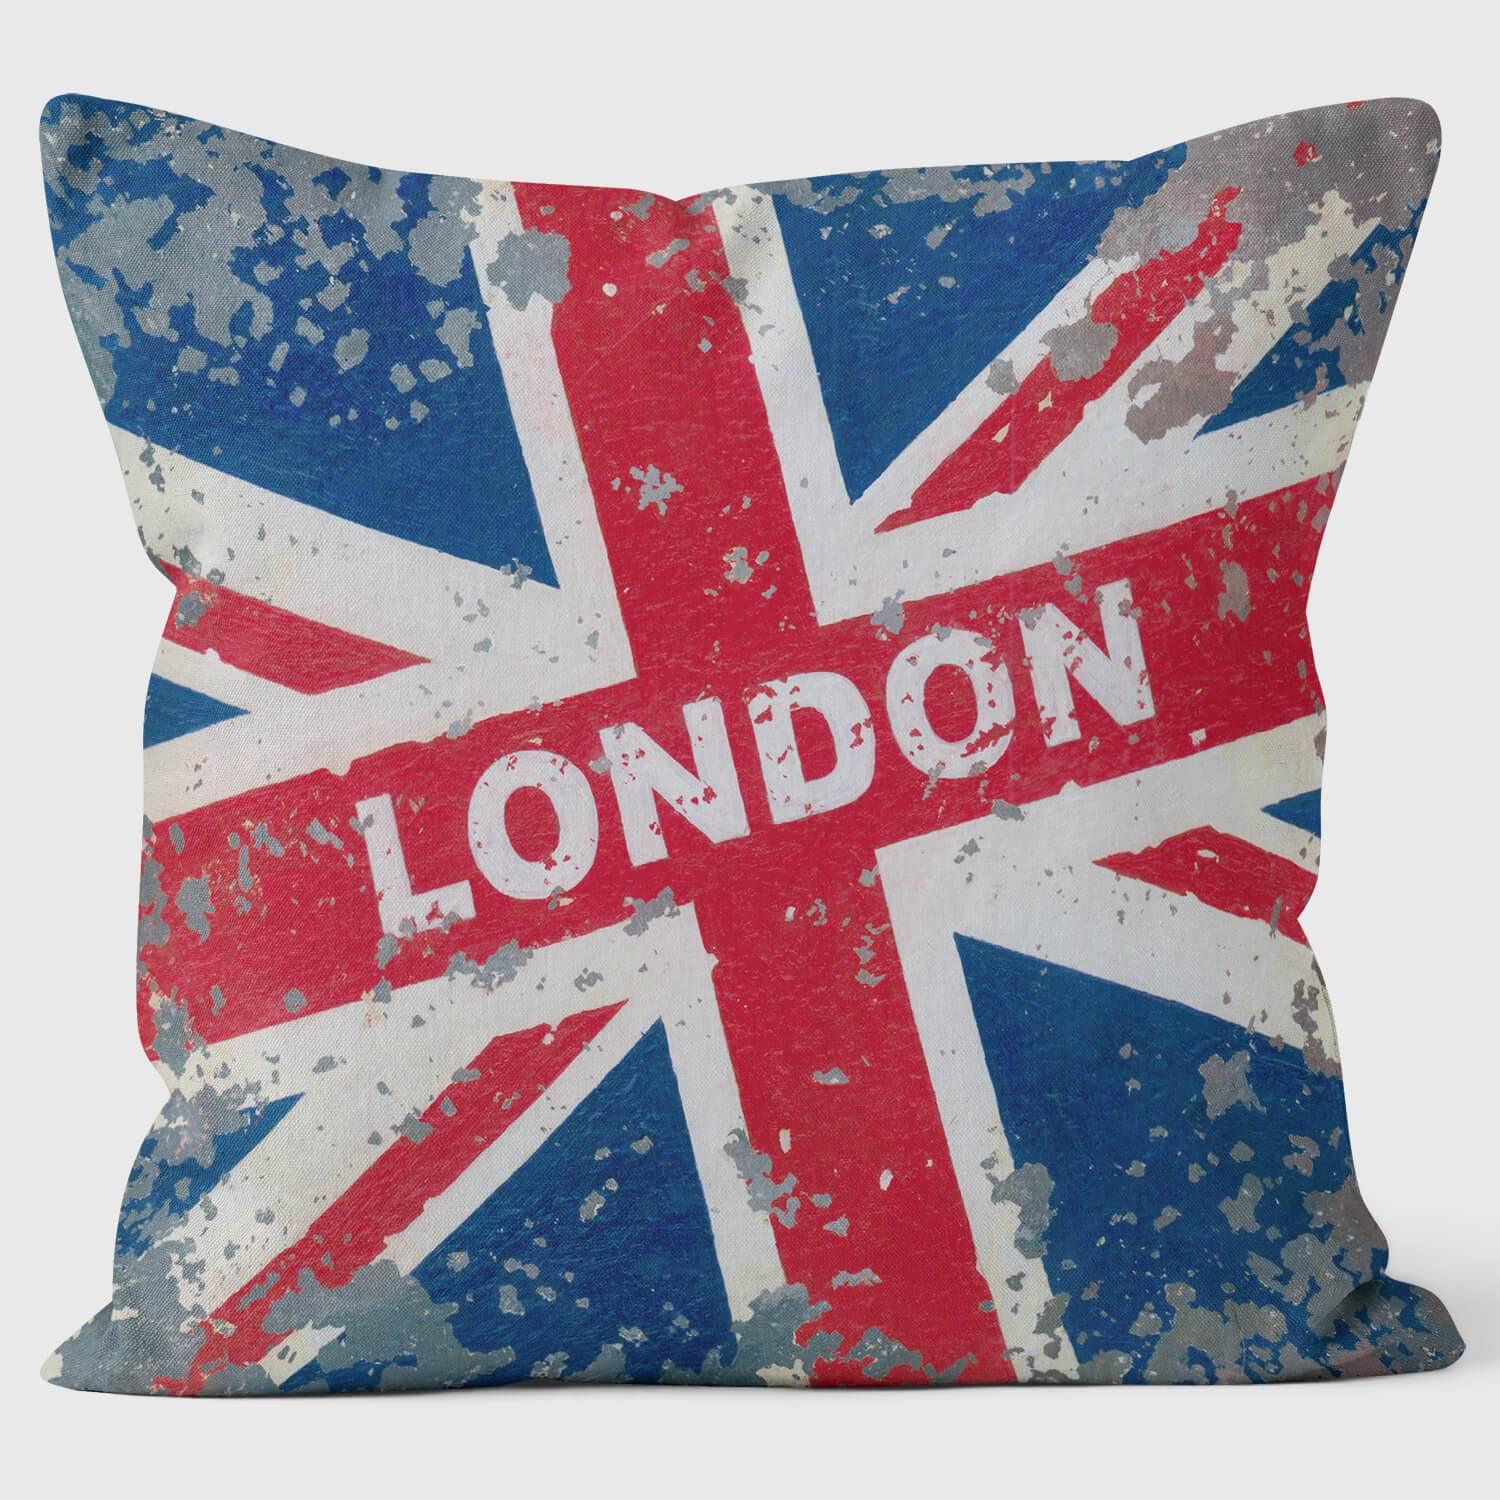 LONDON Union Jack - Martin Wiscombe - Retro Art Print Cushion - Handmade Cushions UK - WeLoveCushions